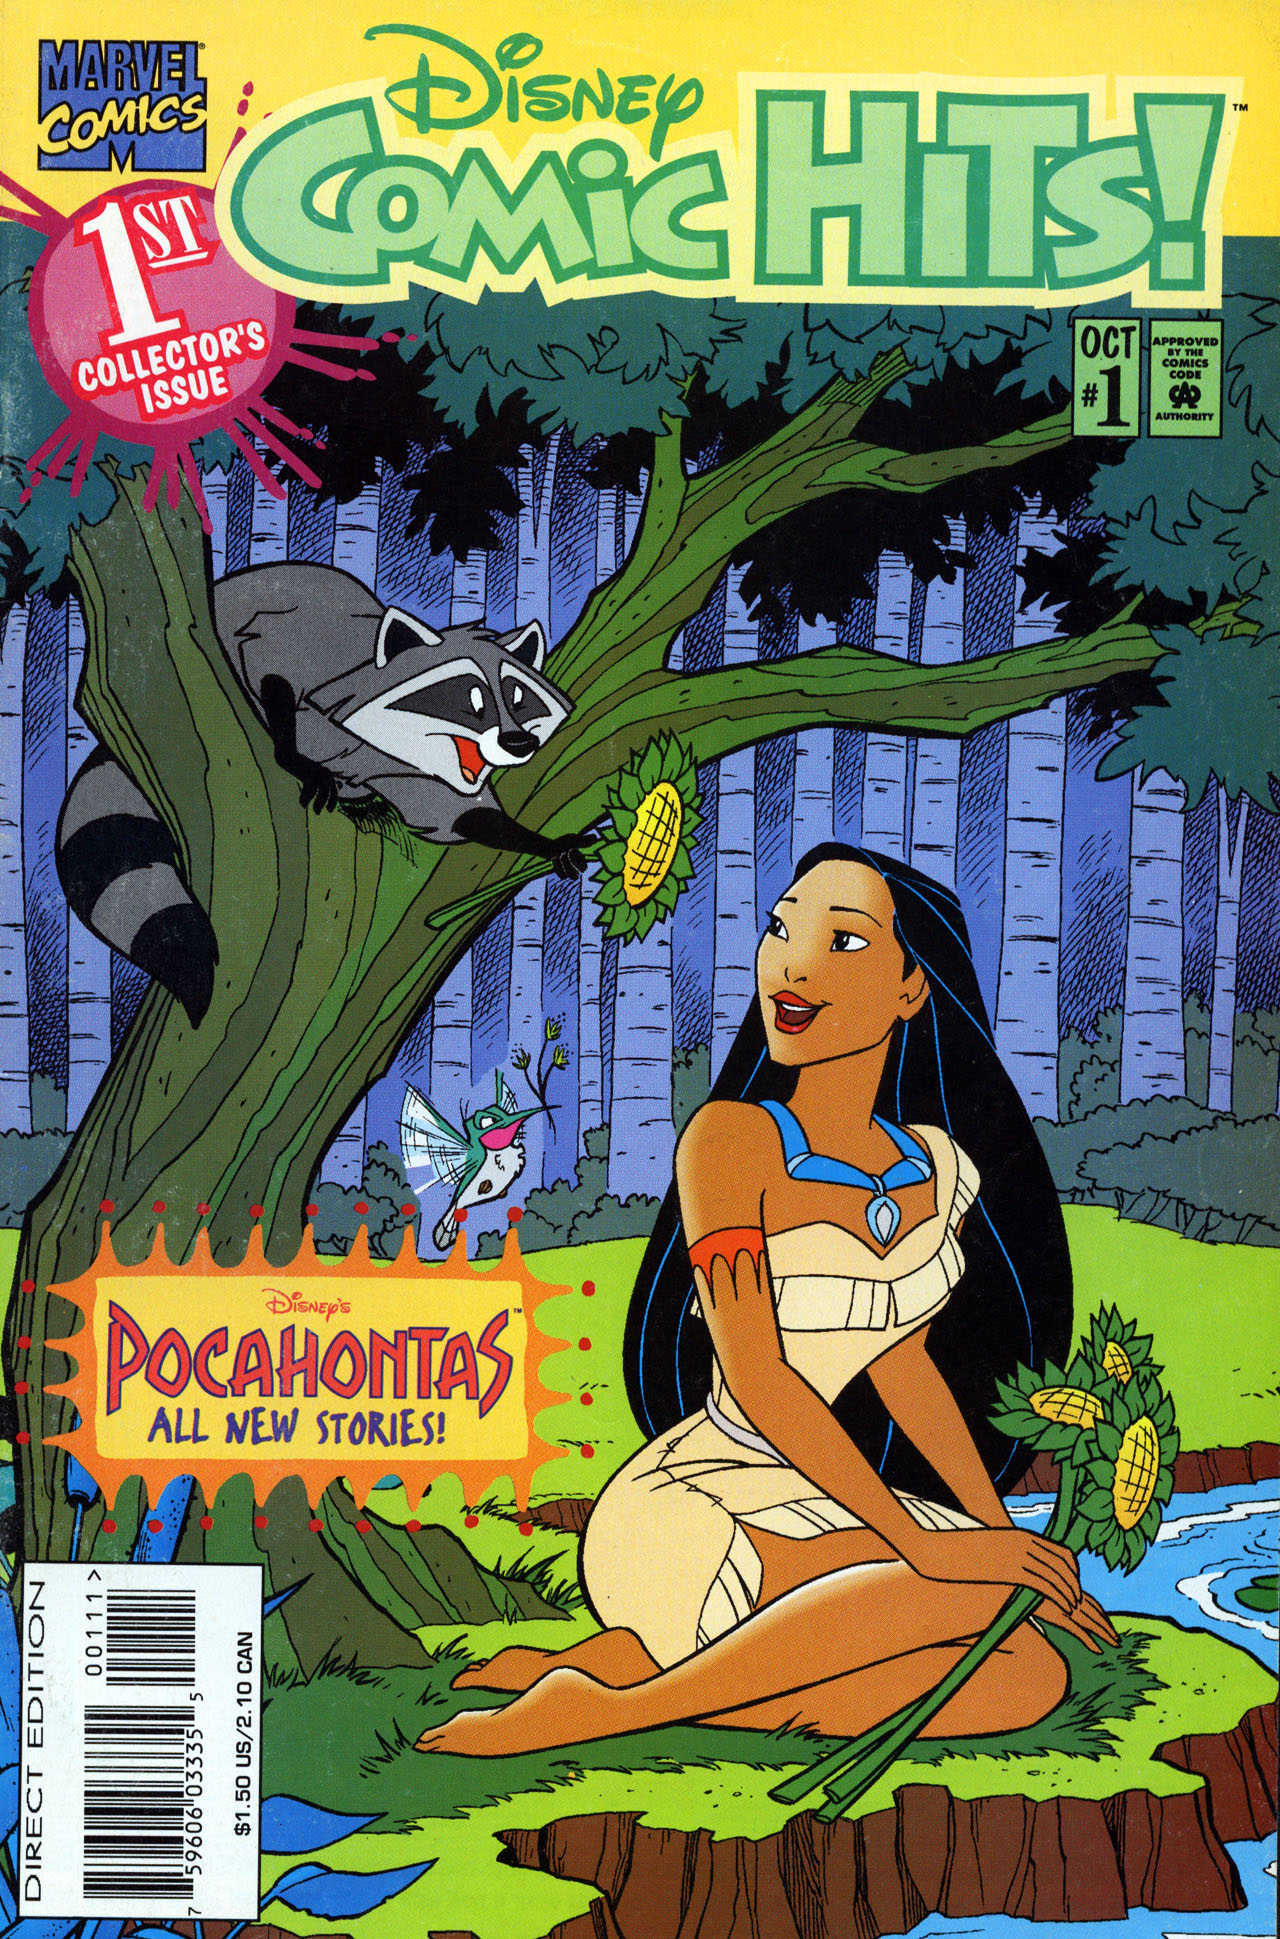 Read online Disney Comic Hits comic -  Issue #1 - 1